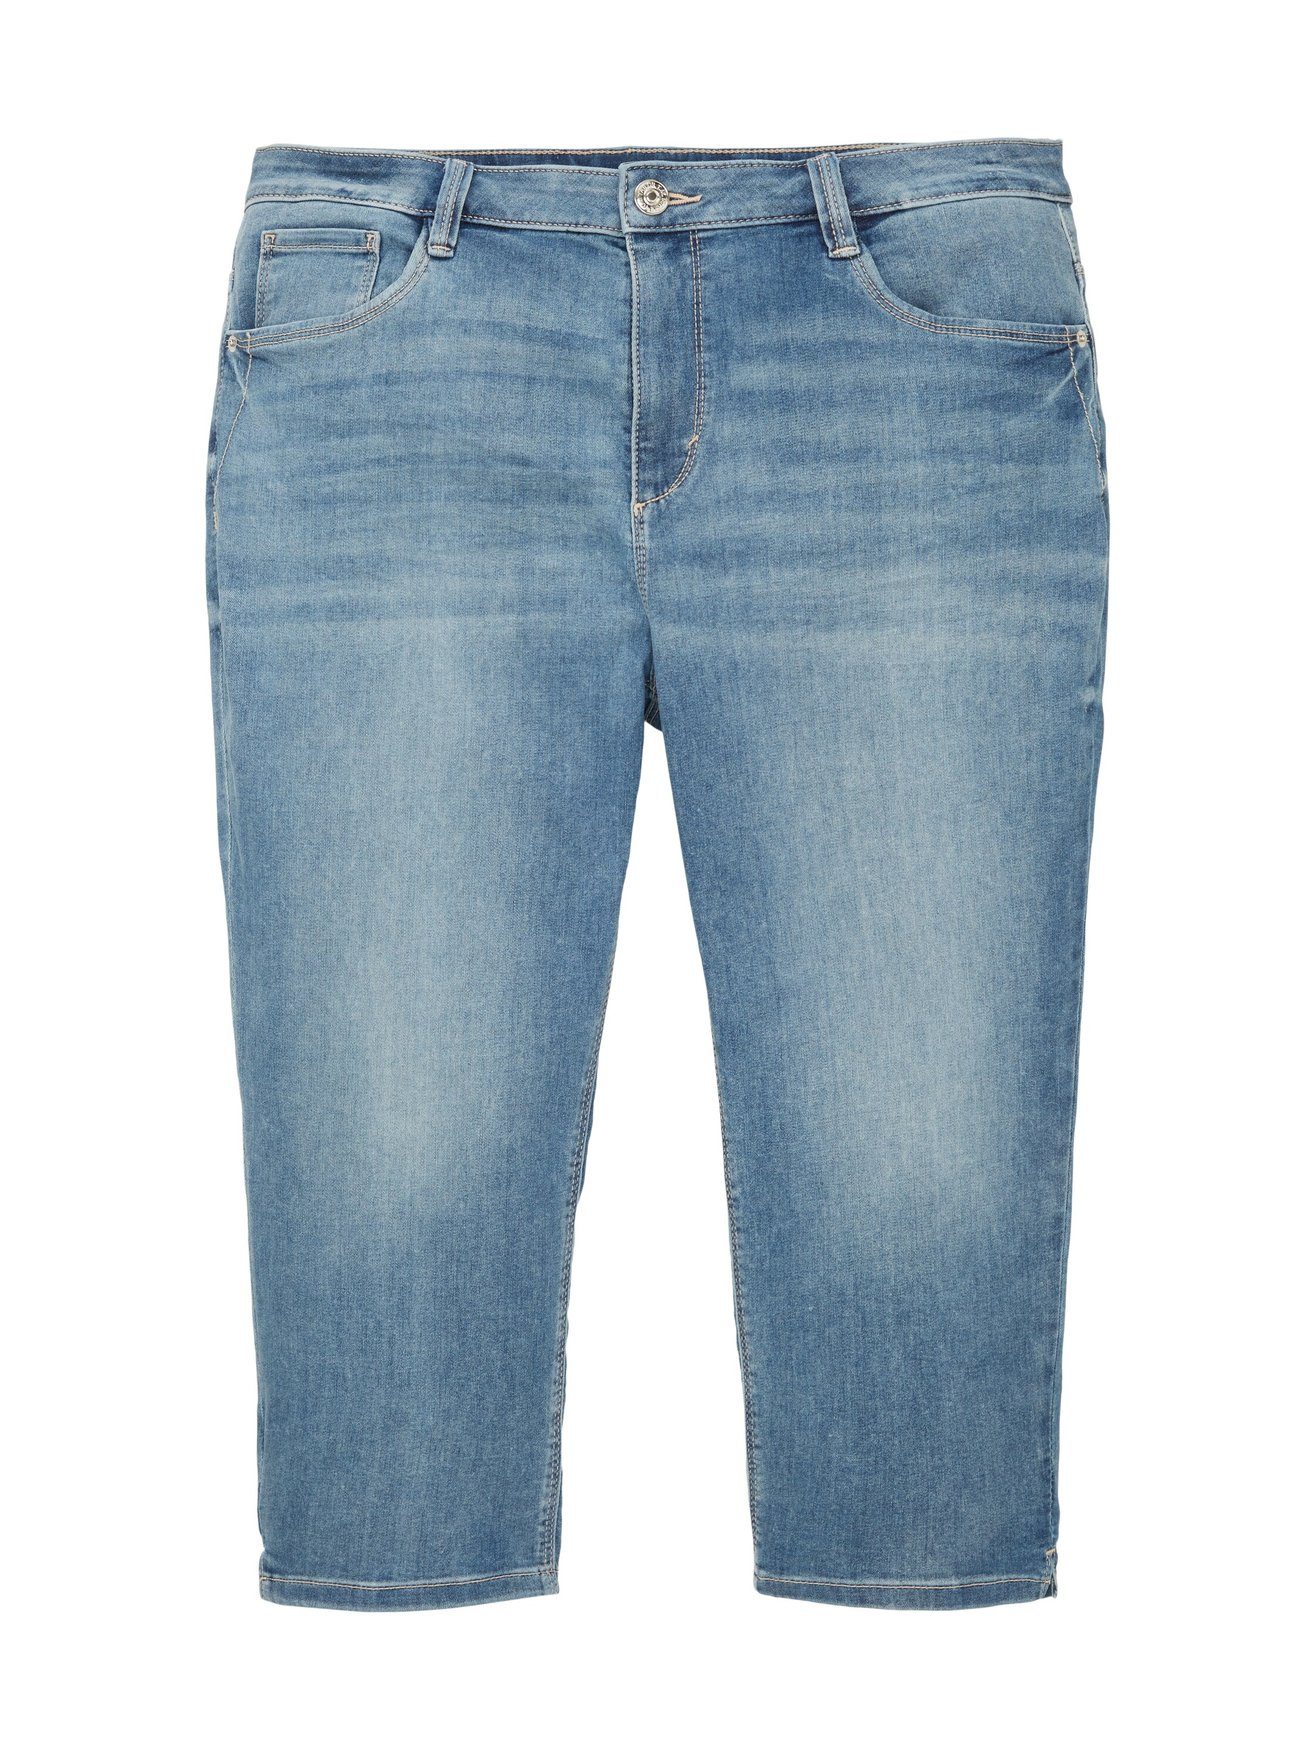 TAILOR Hellblau Capri Jeans Caprihose Denim TOM KATE in Shorts SLIM 5314